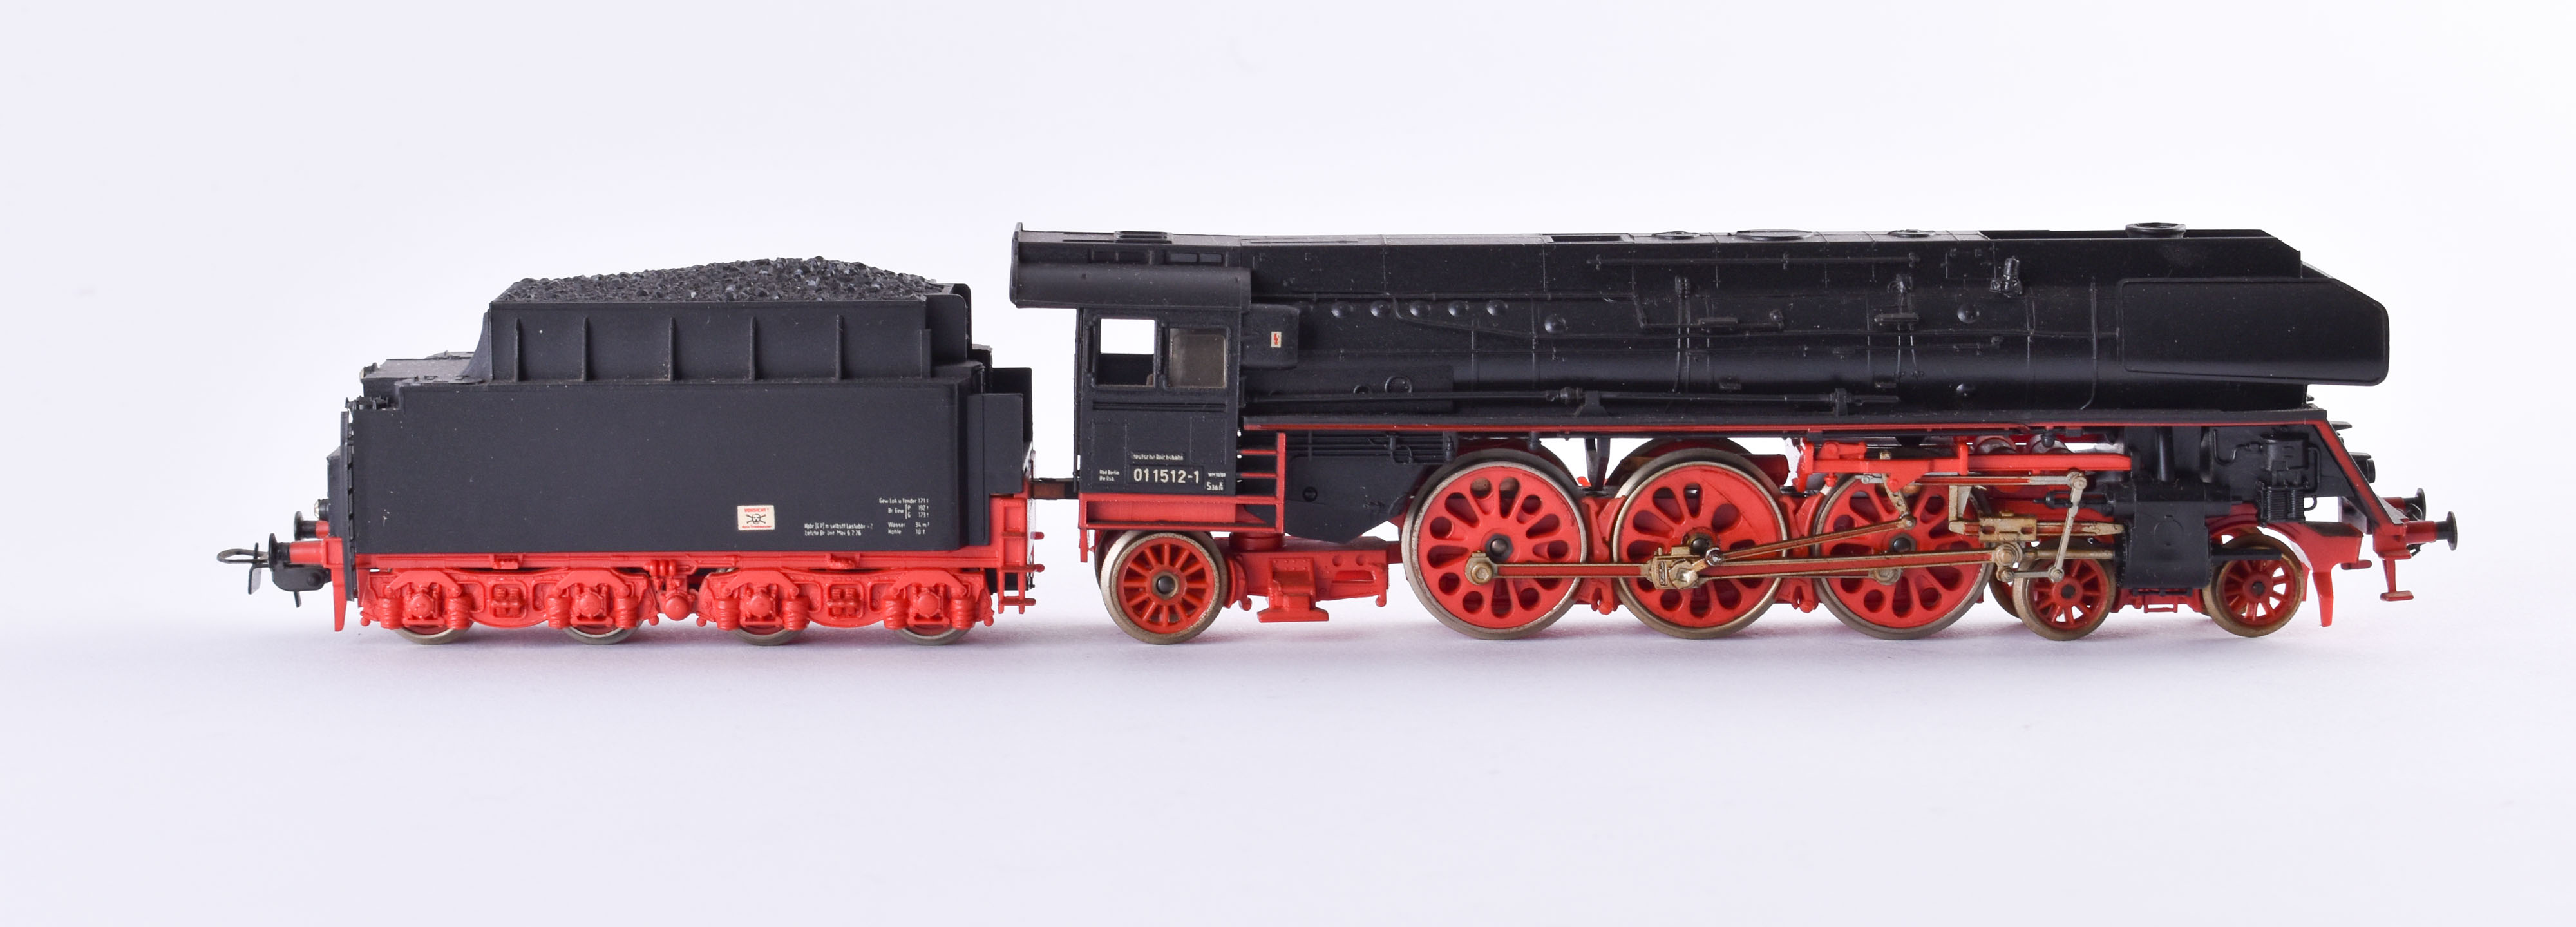 Steam locomotive BR 011512-1 DR - Piko